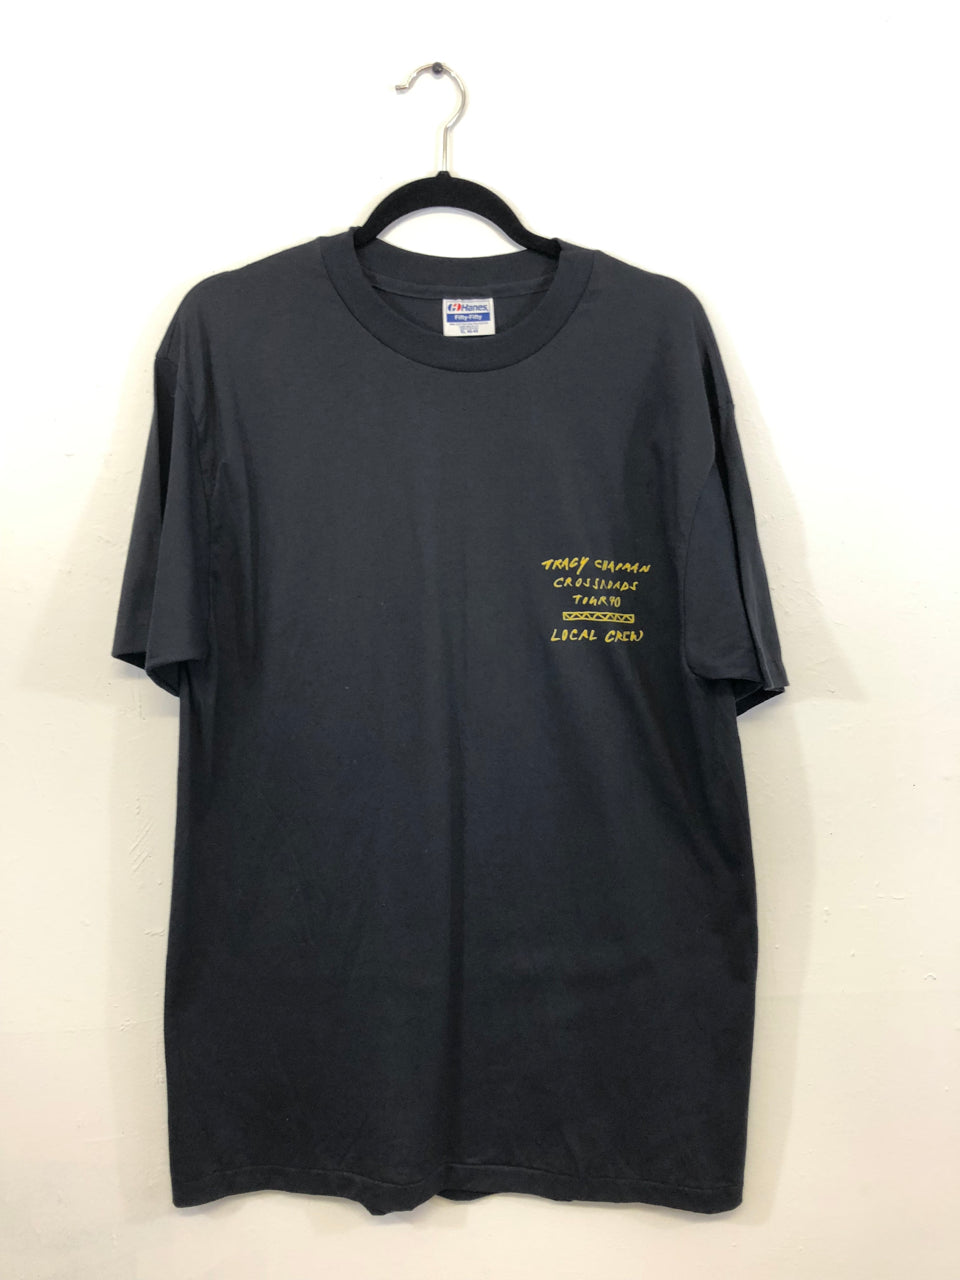 Tracy Chapman Crossroads Tour '90 Local Crew T-Shirt